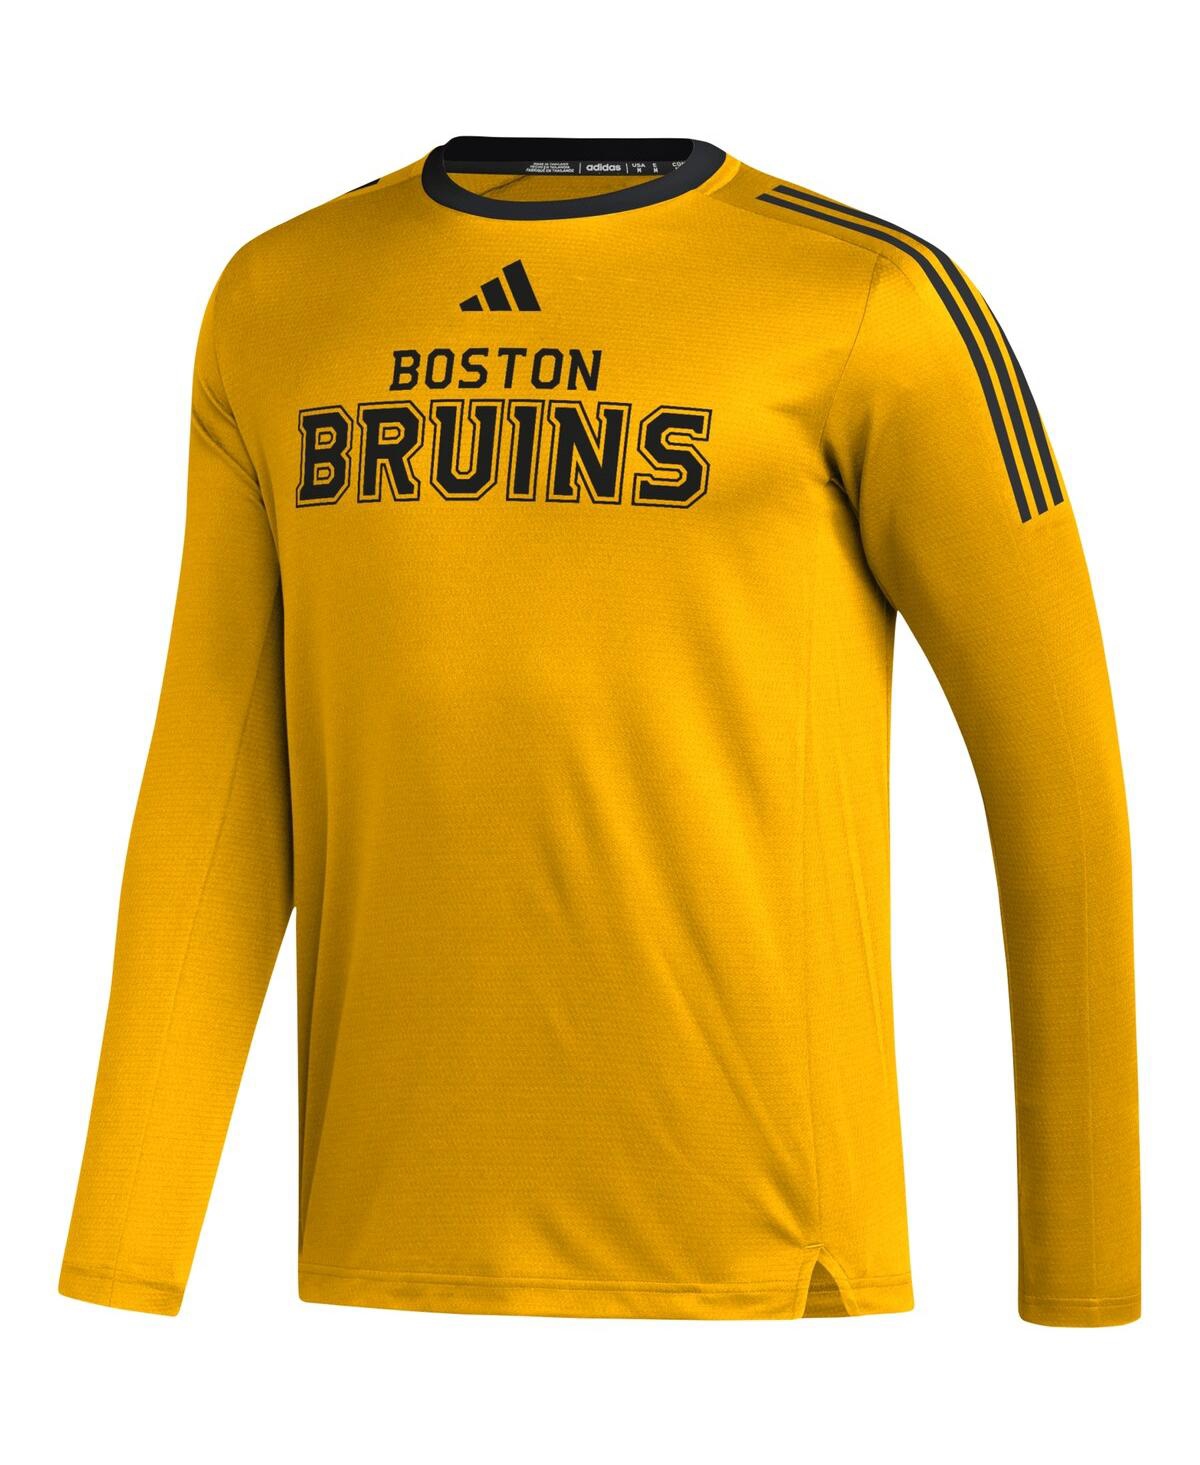 Shop Adidas Originals Men's Adidas Gold Boston Bruins Aeroready Long Sleeve T-shirt